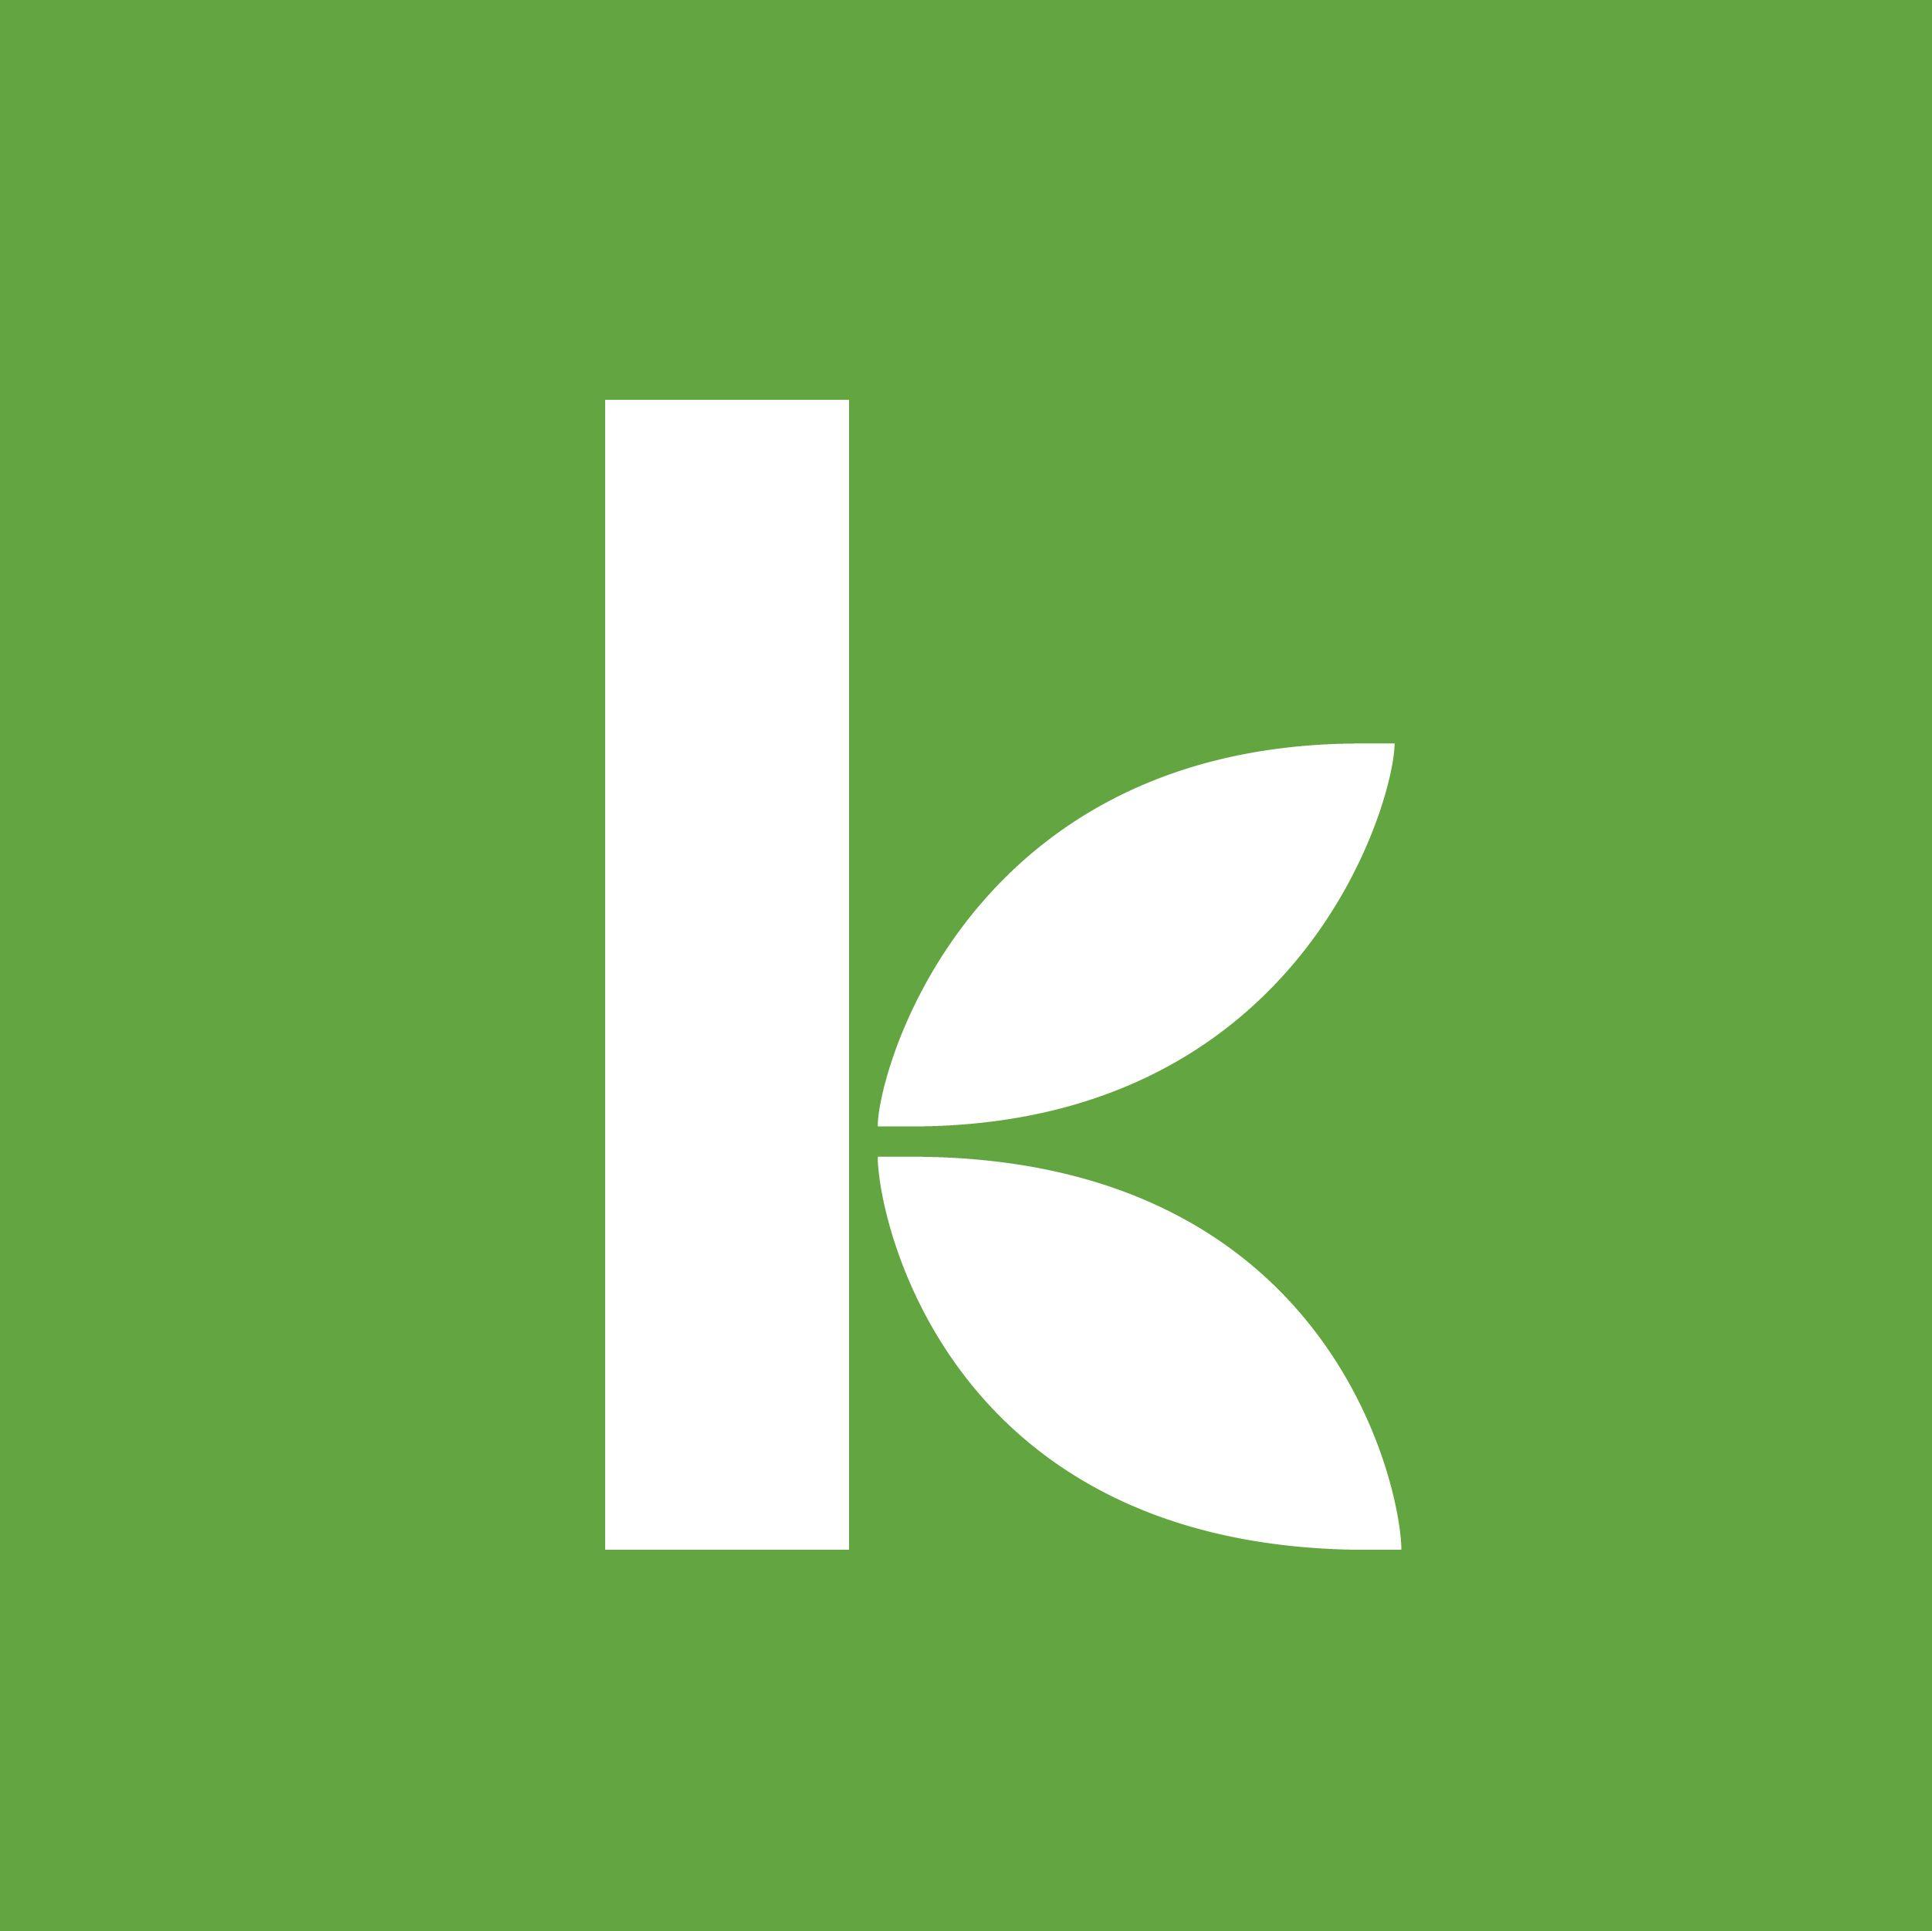 Kiva Logo - About